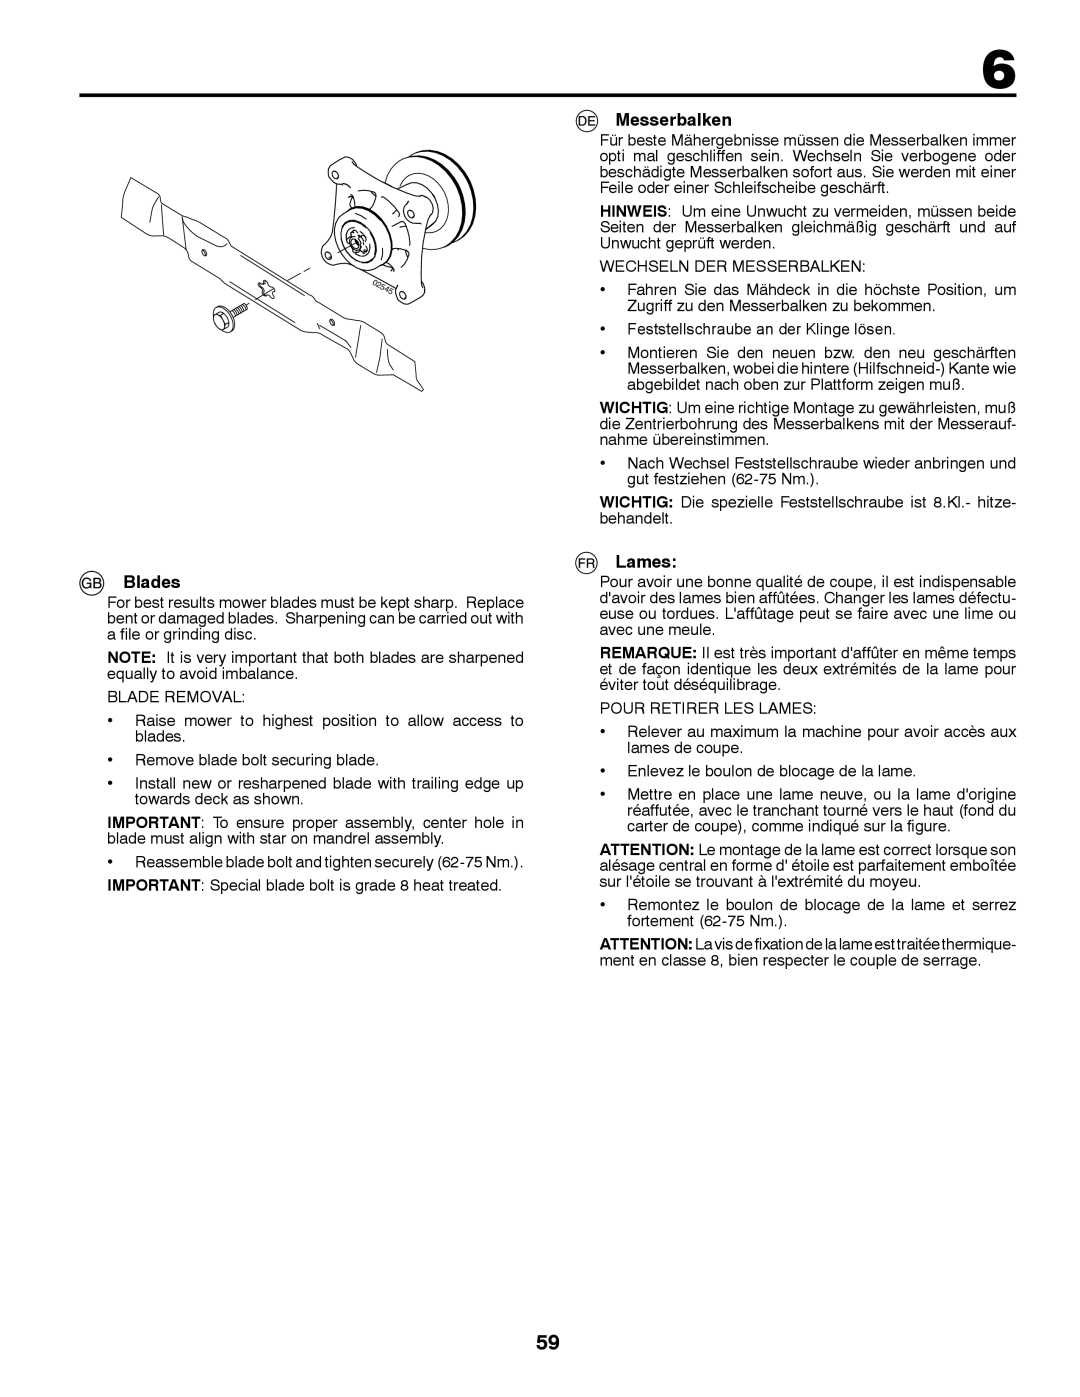 McCulloch 96041016500 instruction manual Blades, Messerbalken, Lames 